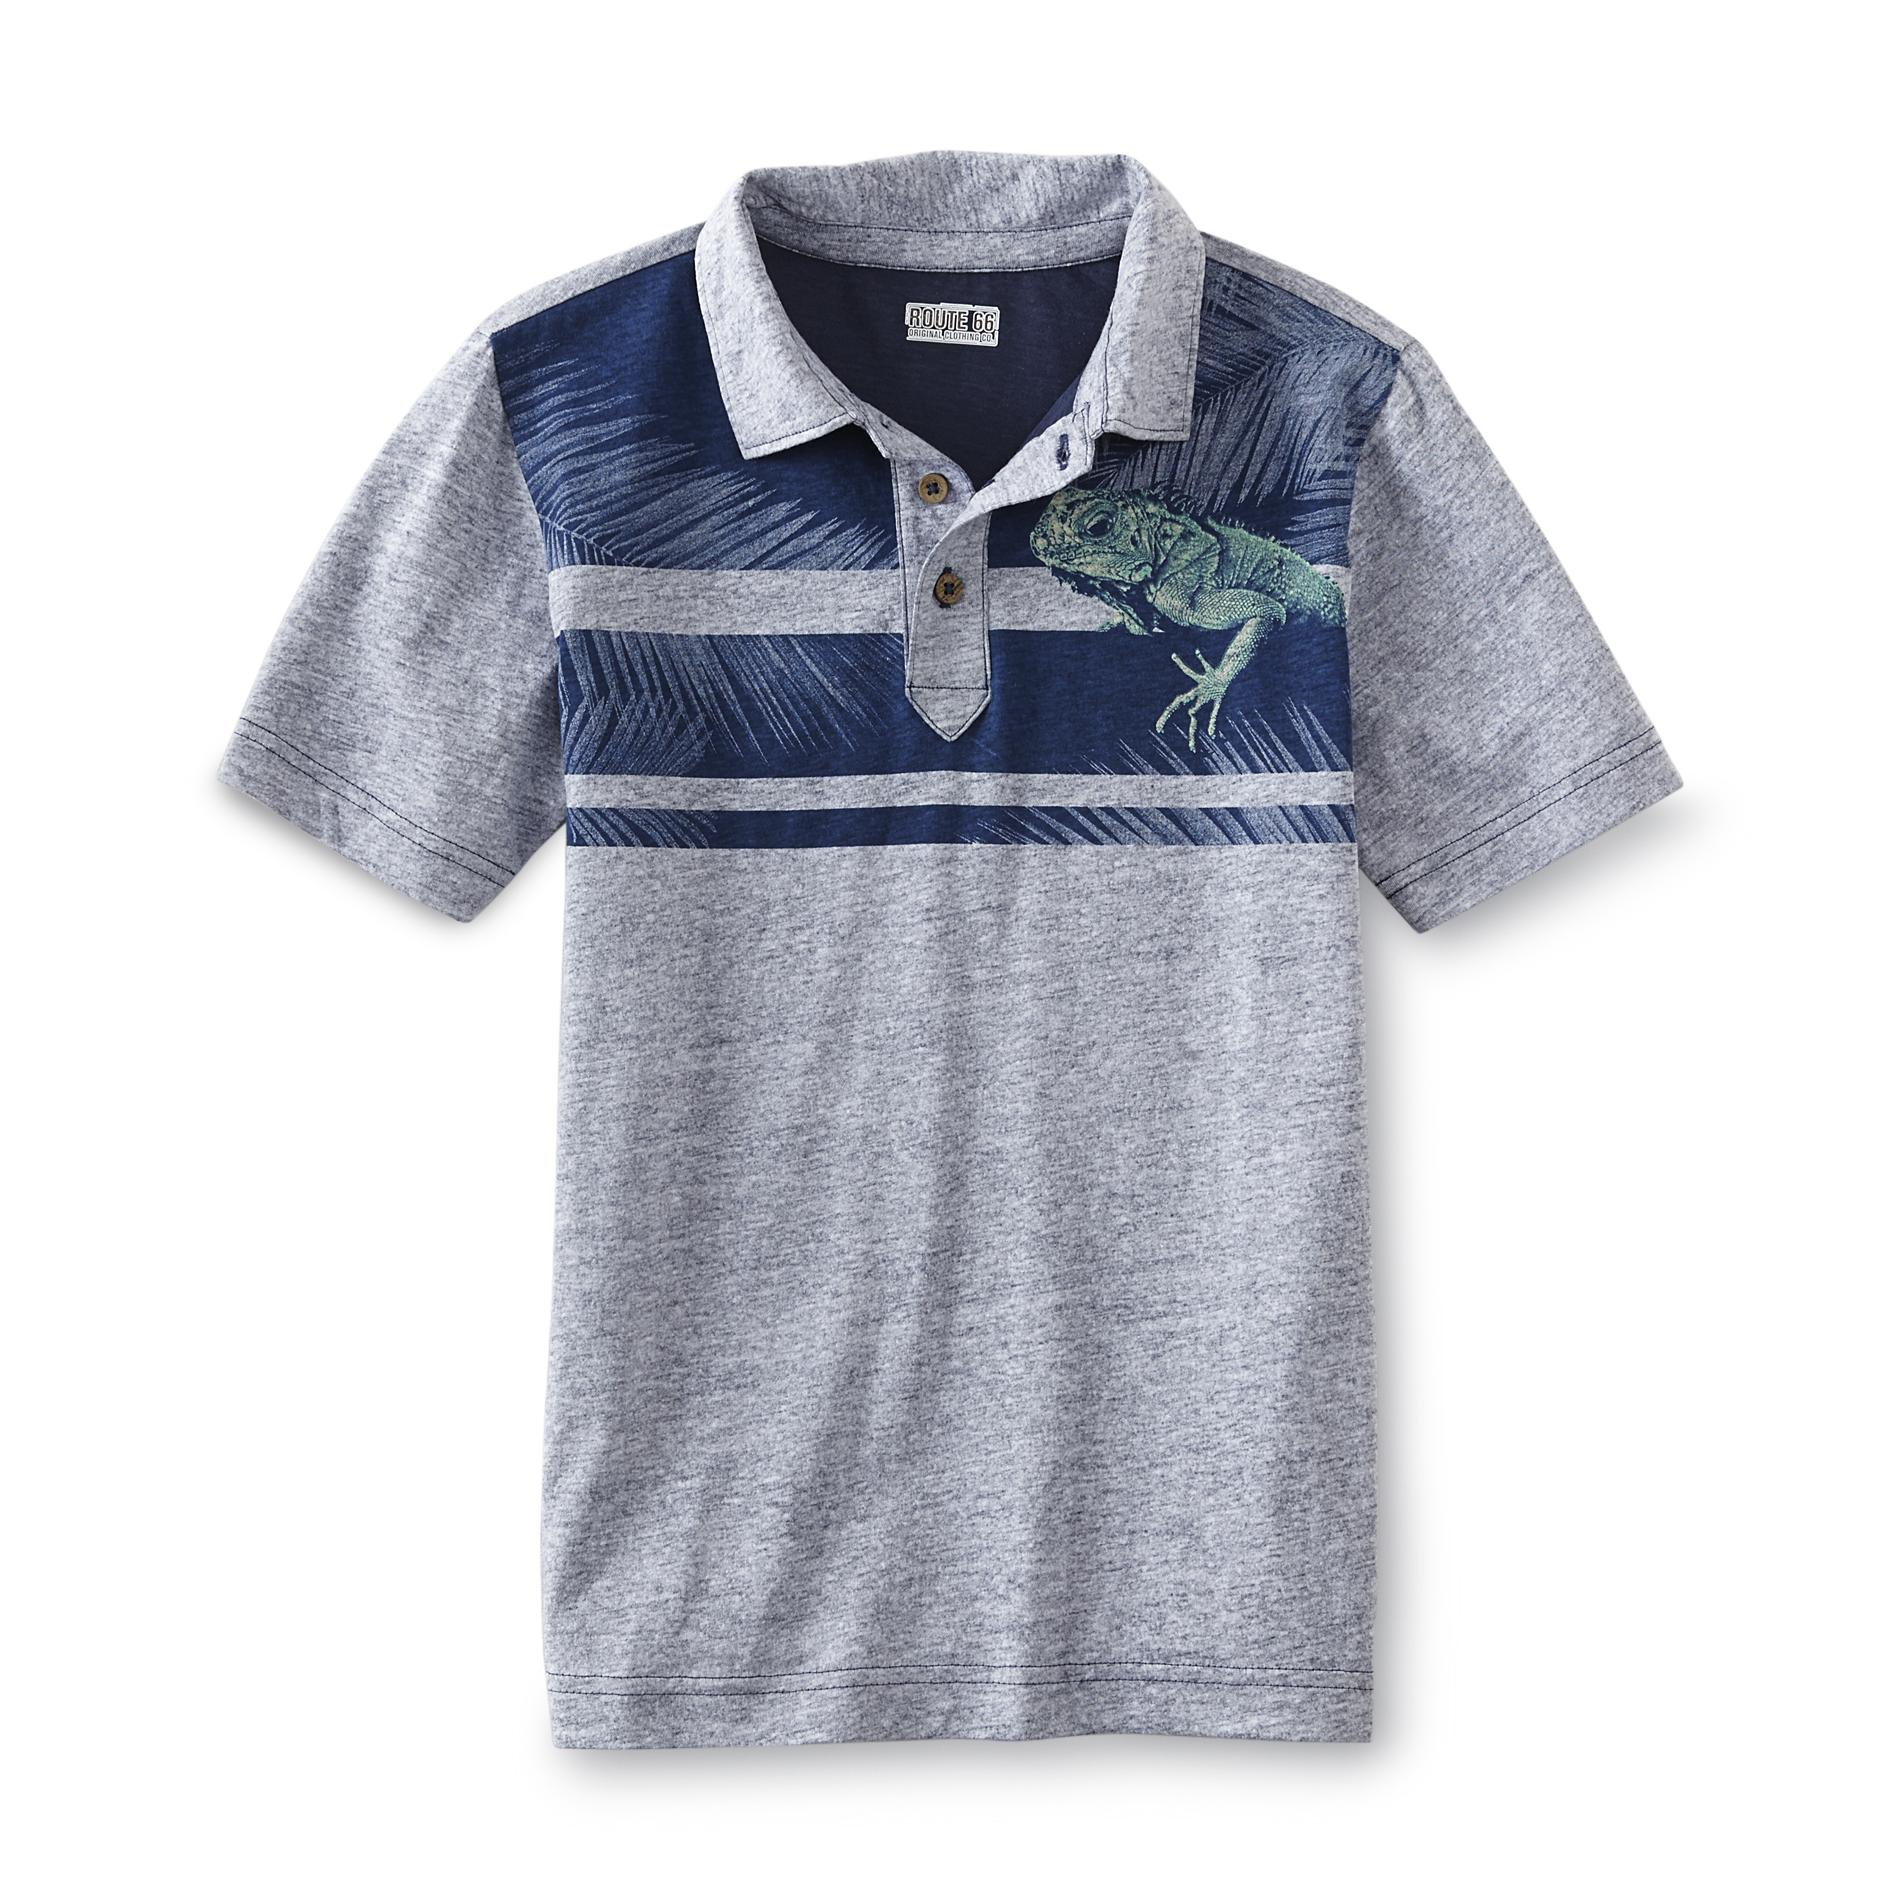 Route 66 Boy's Polo Shirt - Lizard